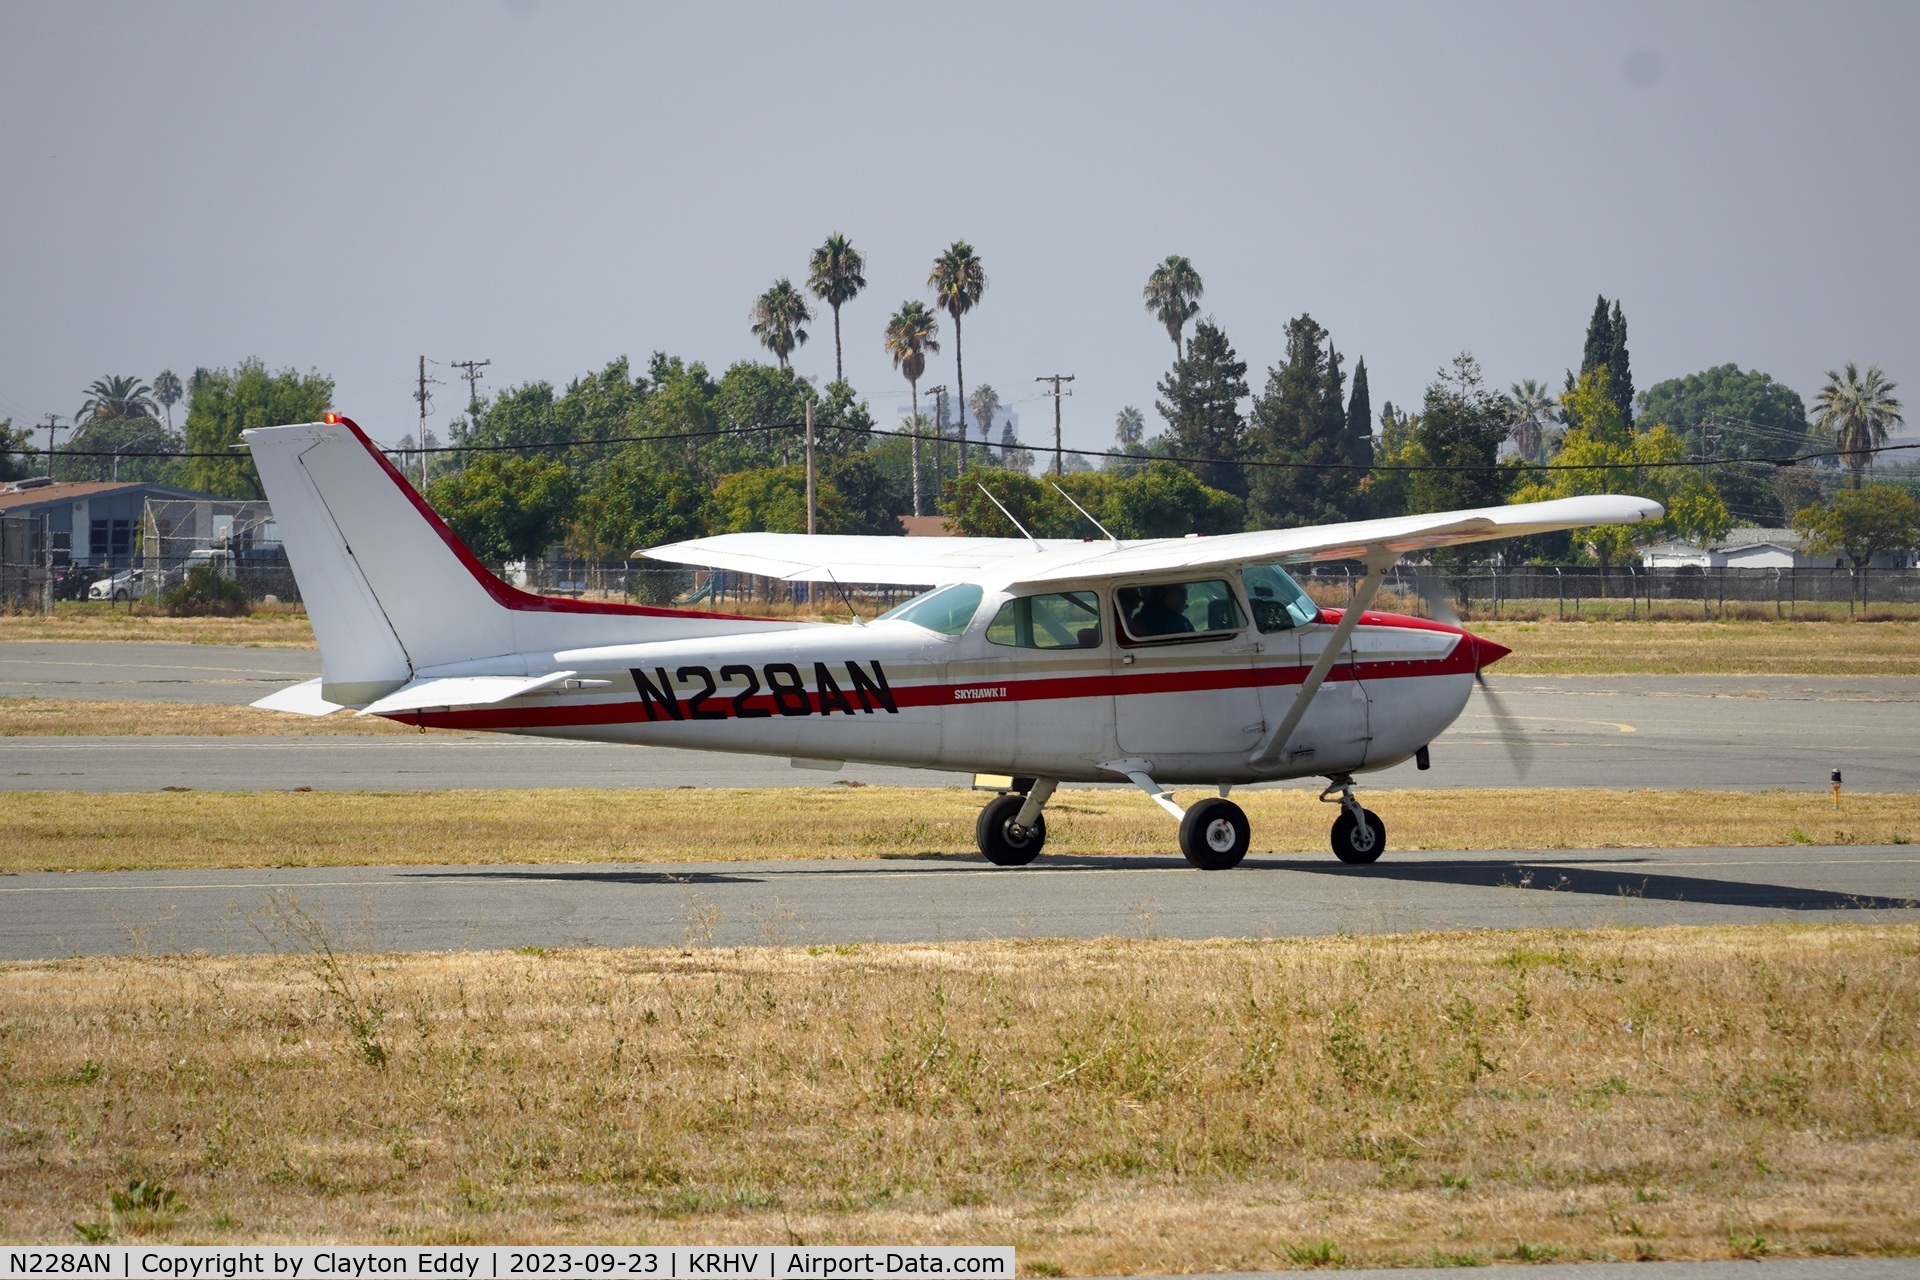 N228AN, 2021 Ceesma 172P Skyhawk C/N 17274354, Reid-Hillview Airport in California 2023.